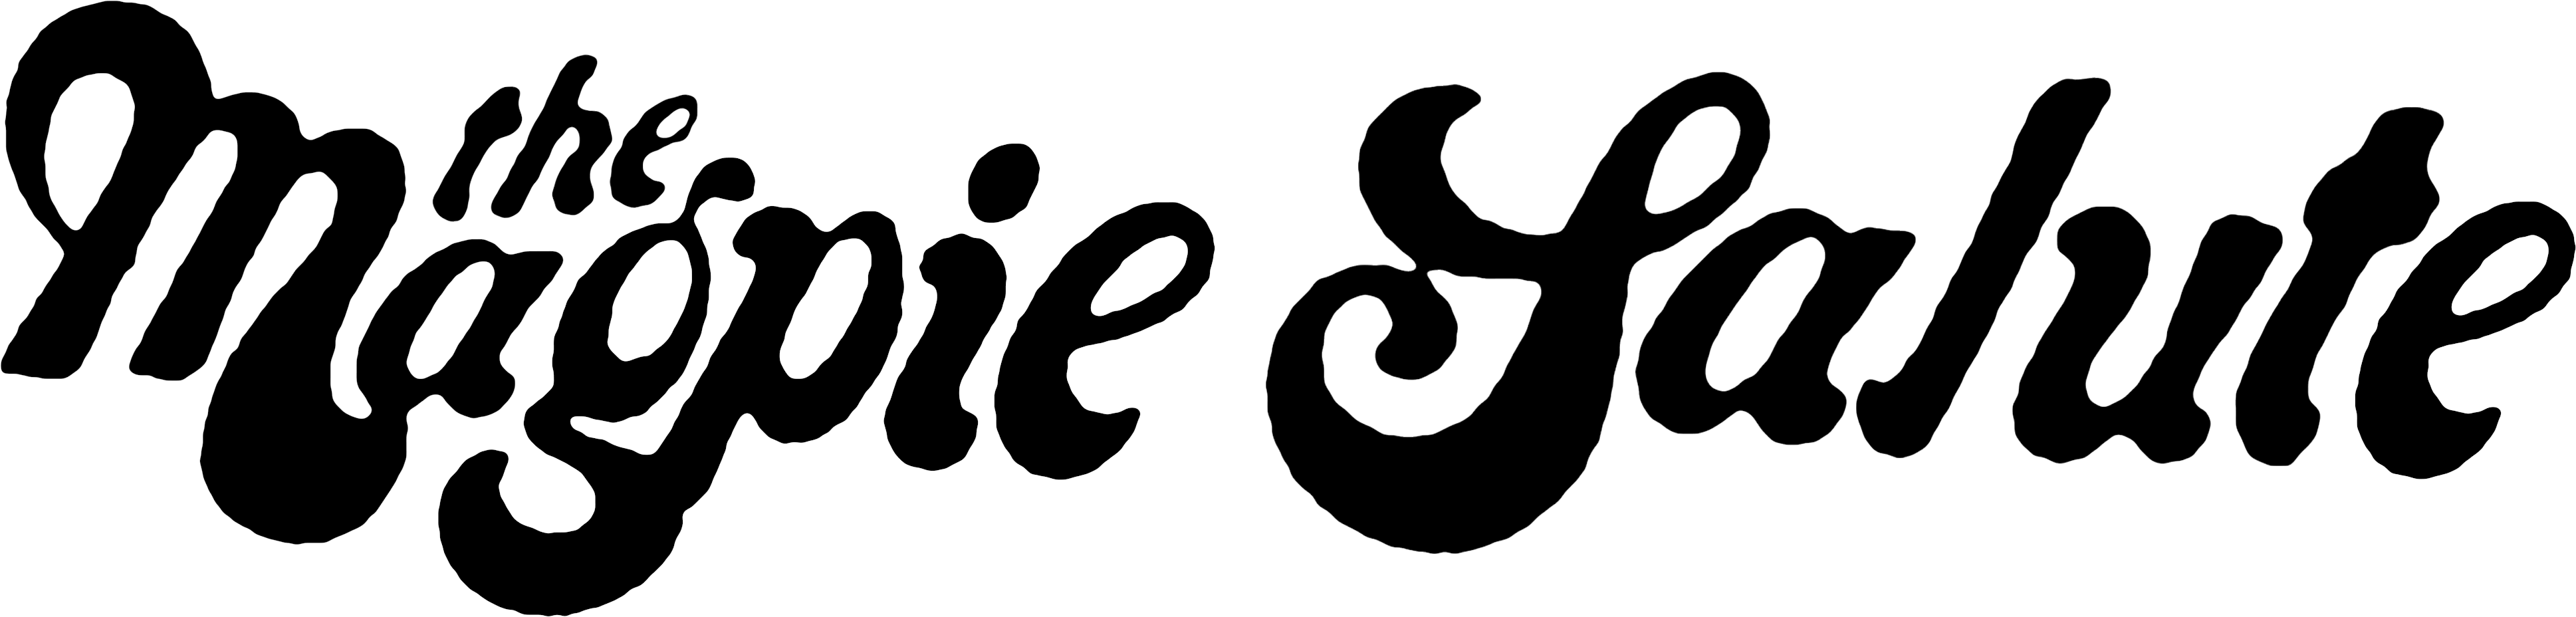 Magpie Salute Logo